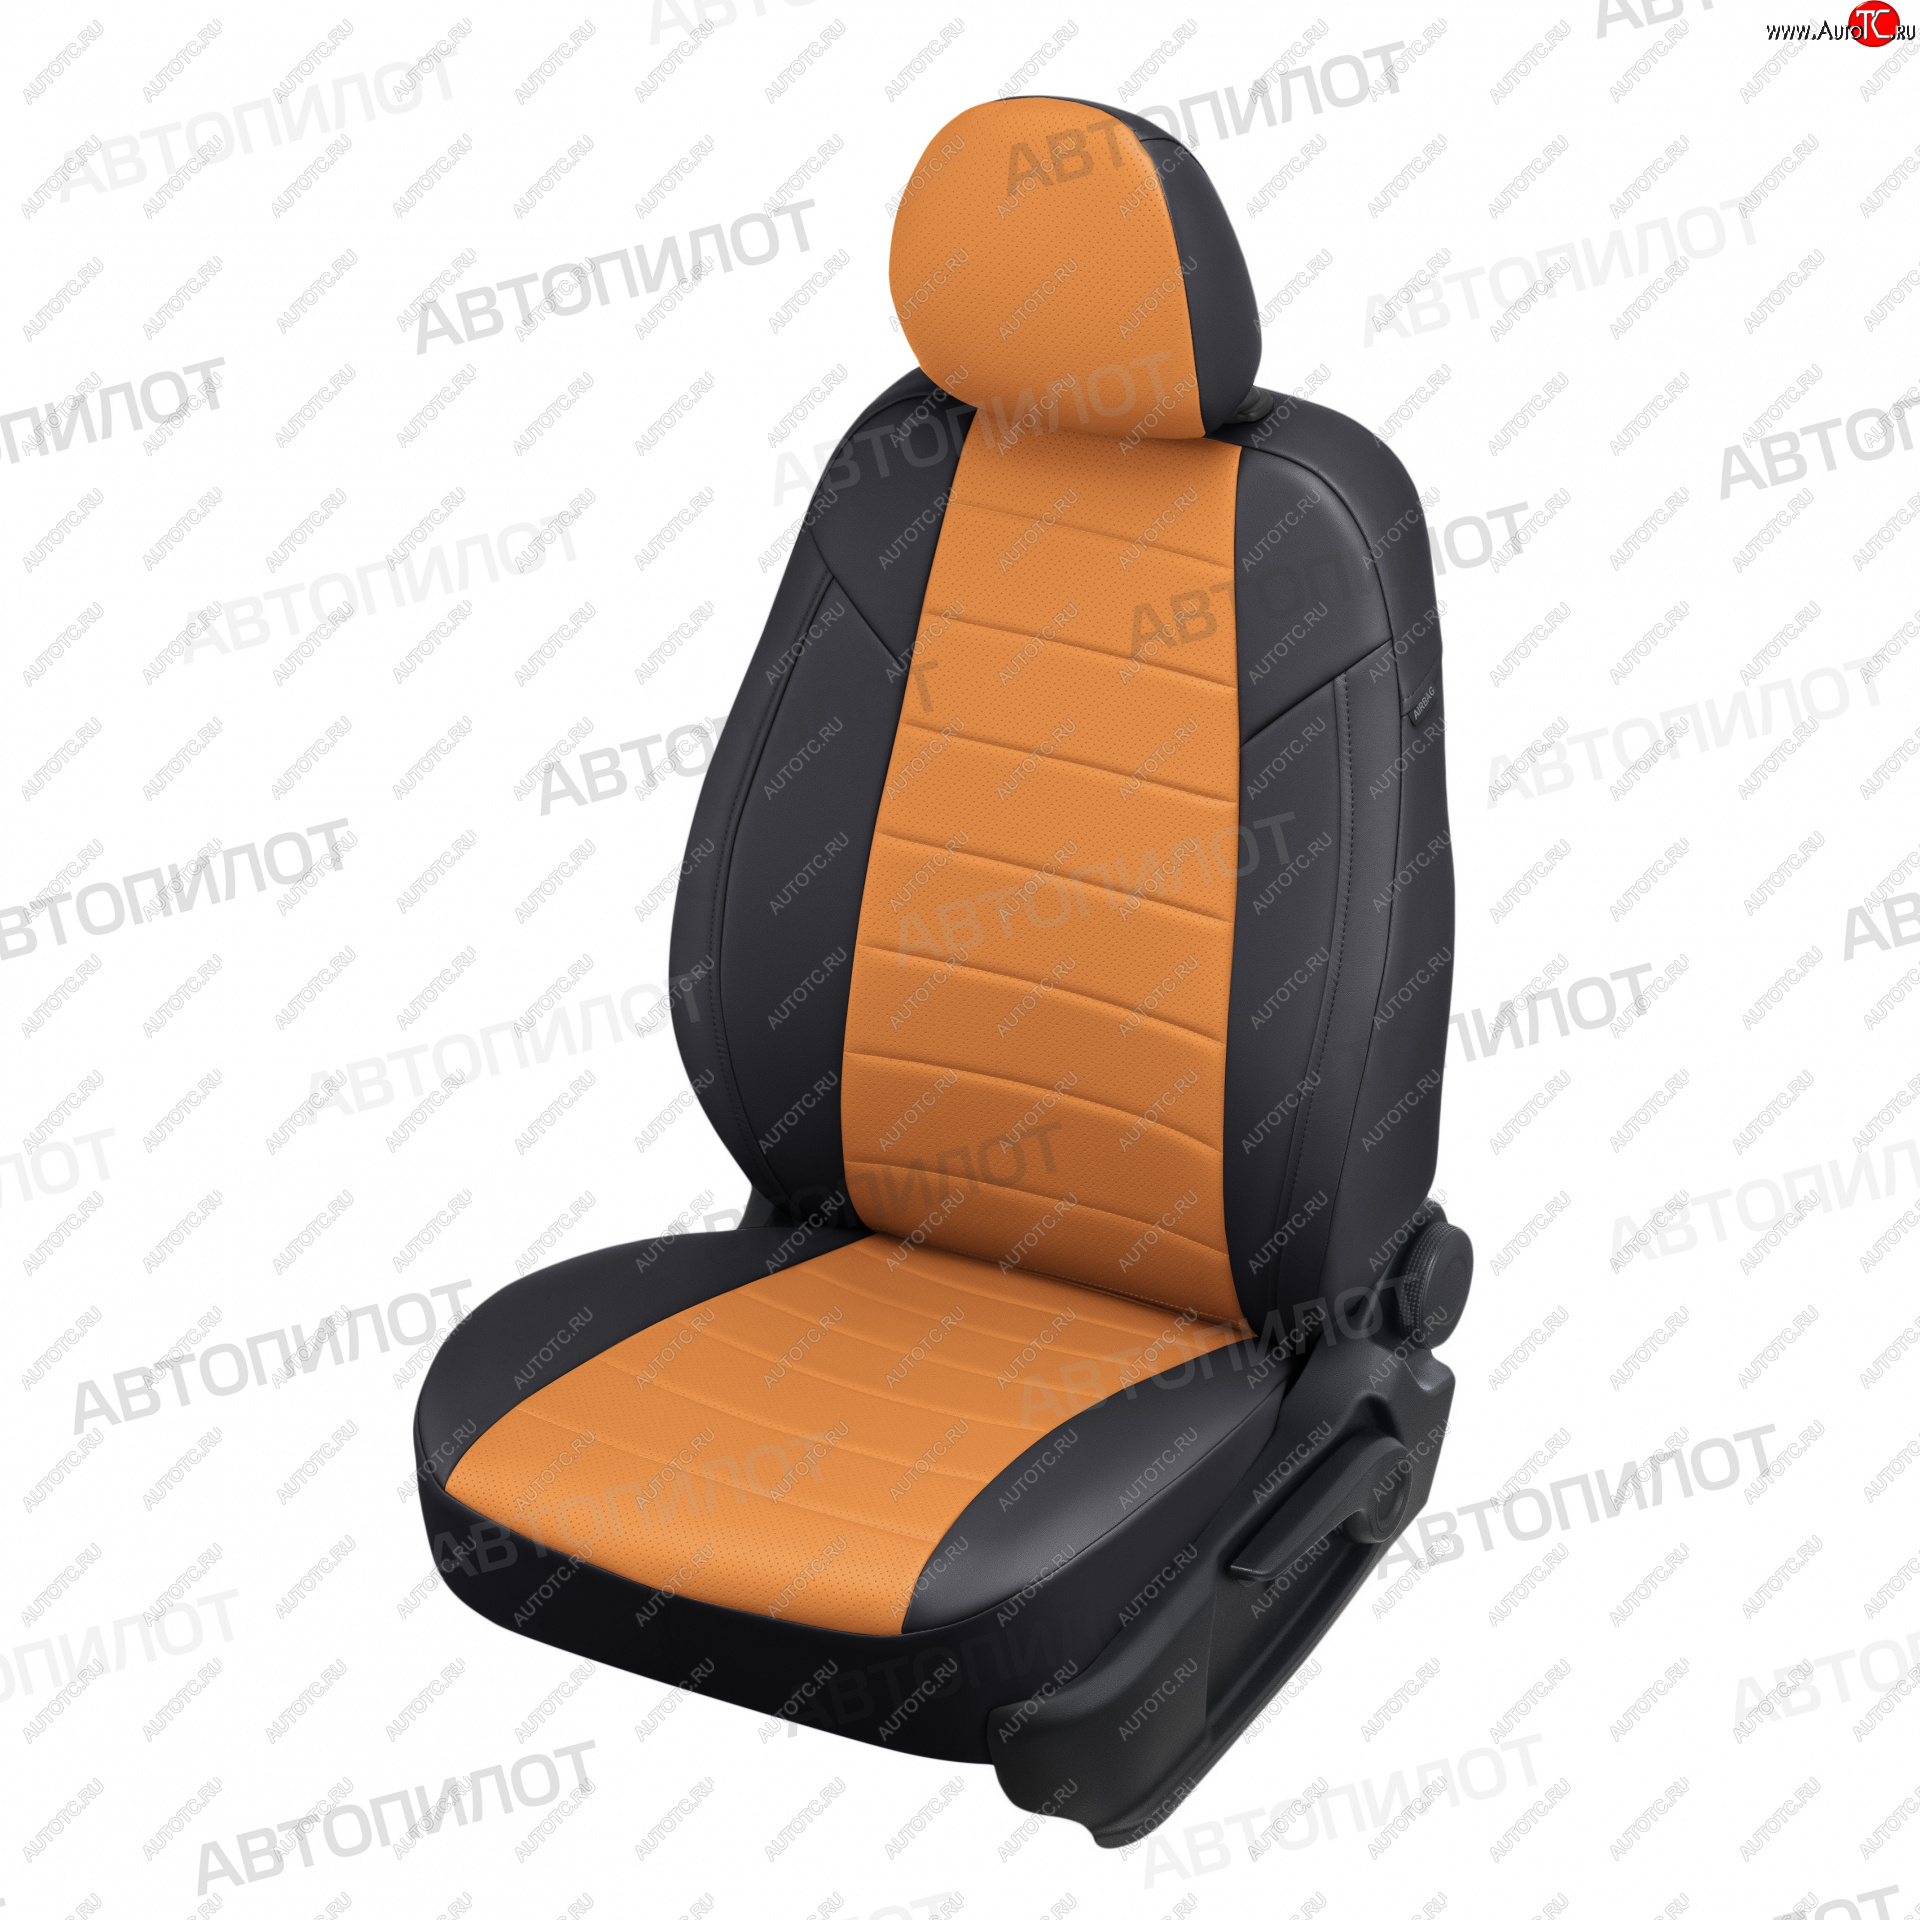 13 449 р. Чехлы сидений (экокожа) Автопилот  Hyundai Sonata  YF (2009-2014) (черный/оранж)